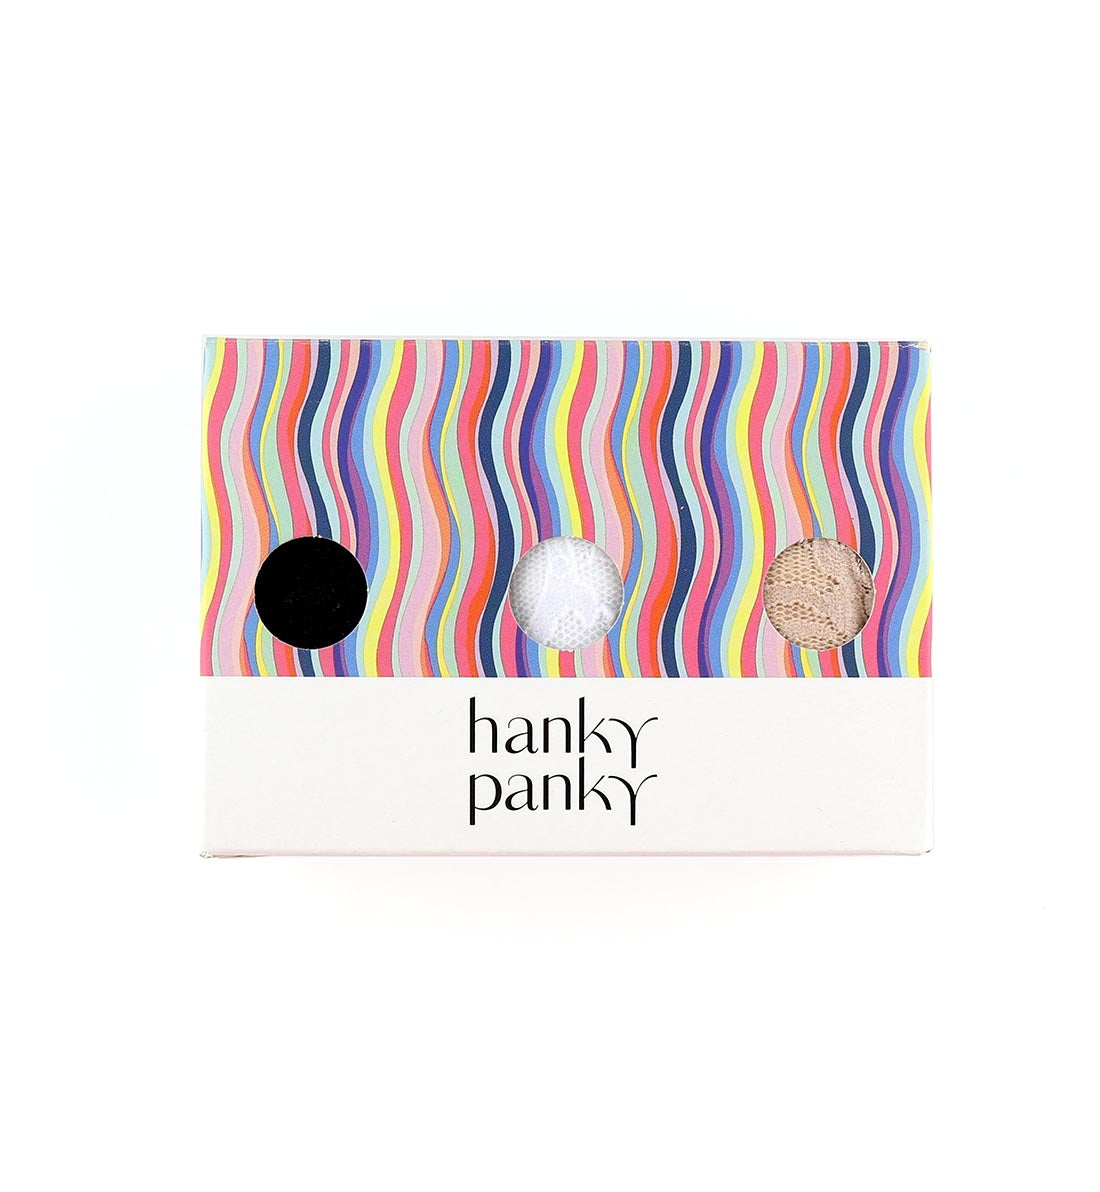 Hanky Panky 3-PACK Signature Lace Low Rise Thong (49113PK),Black/Chai/White - Black/Chai/White,One Size